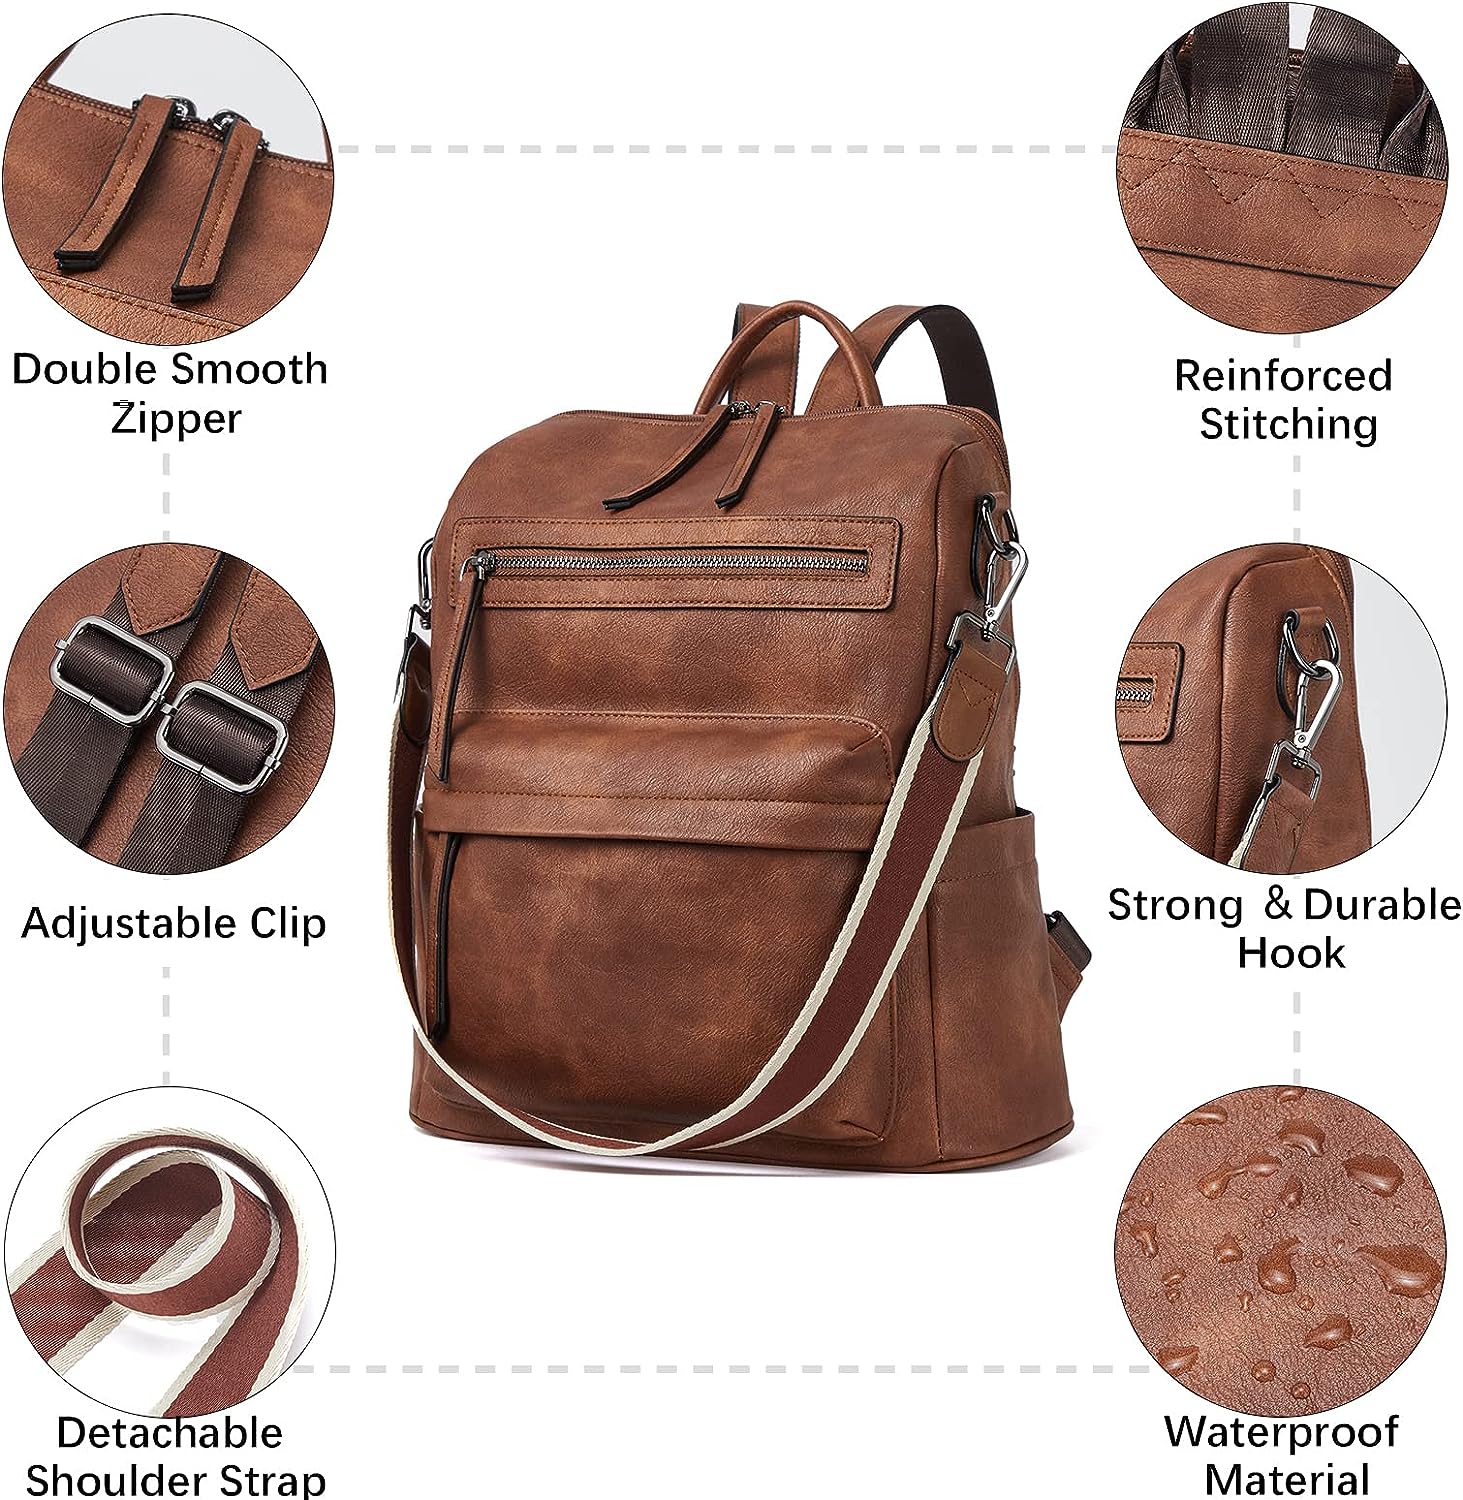 Leather Backpacks | Portland Leather Goods